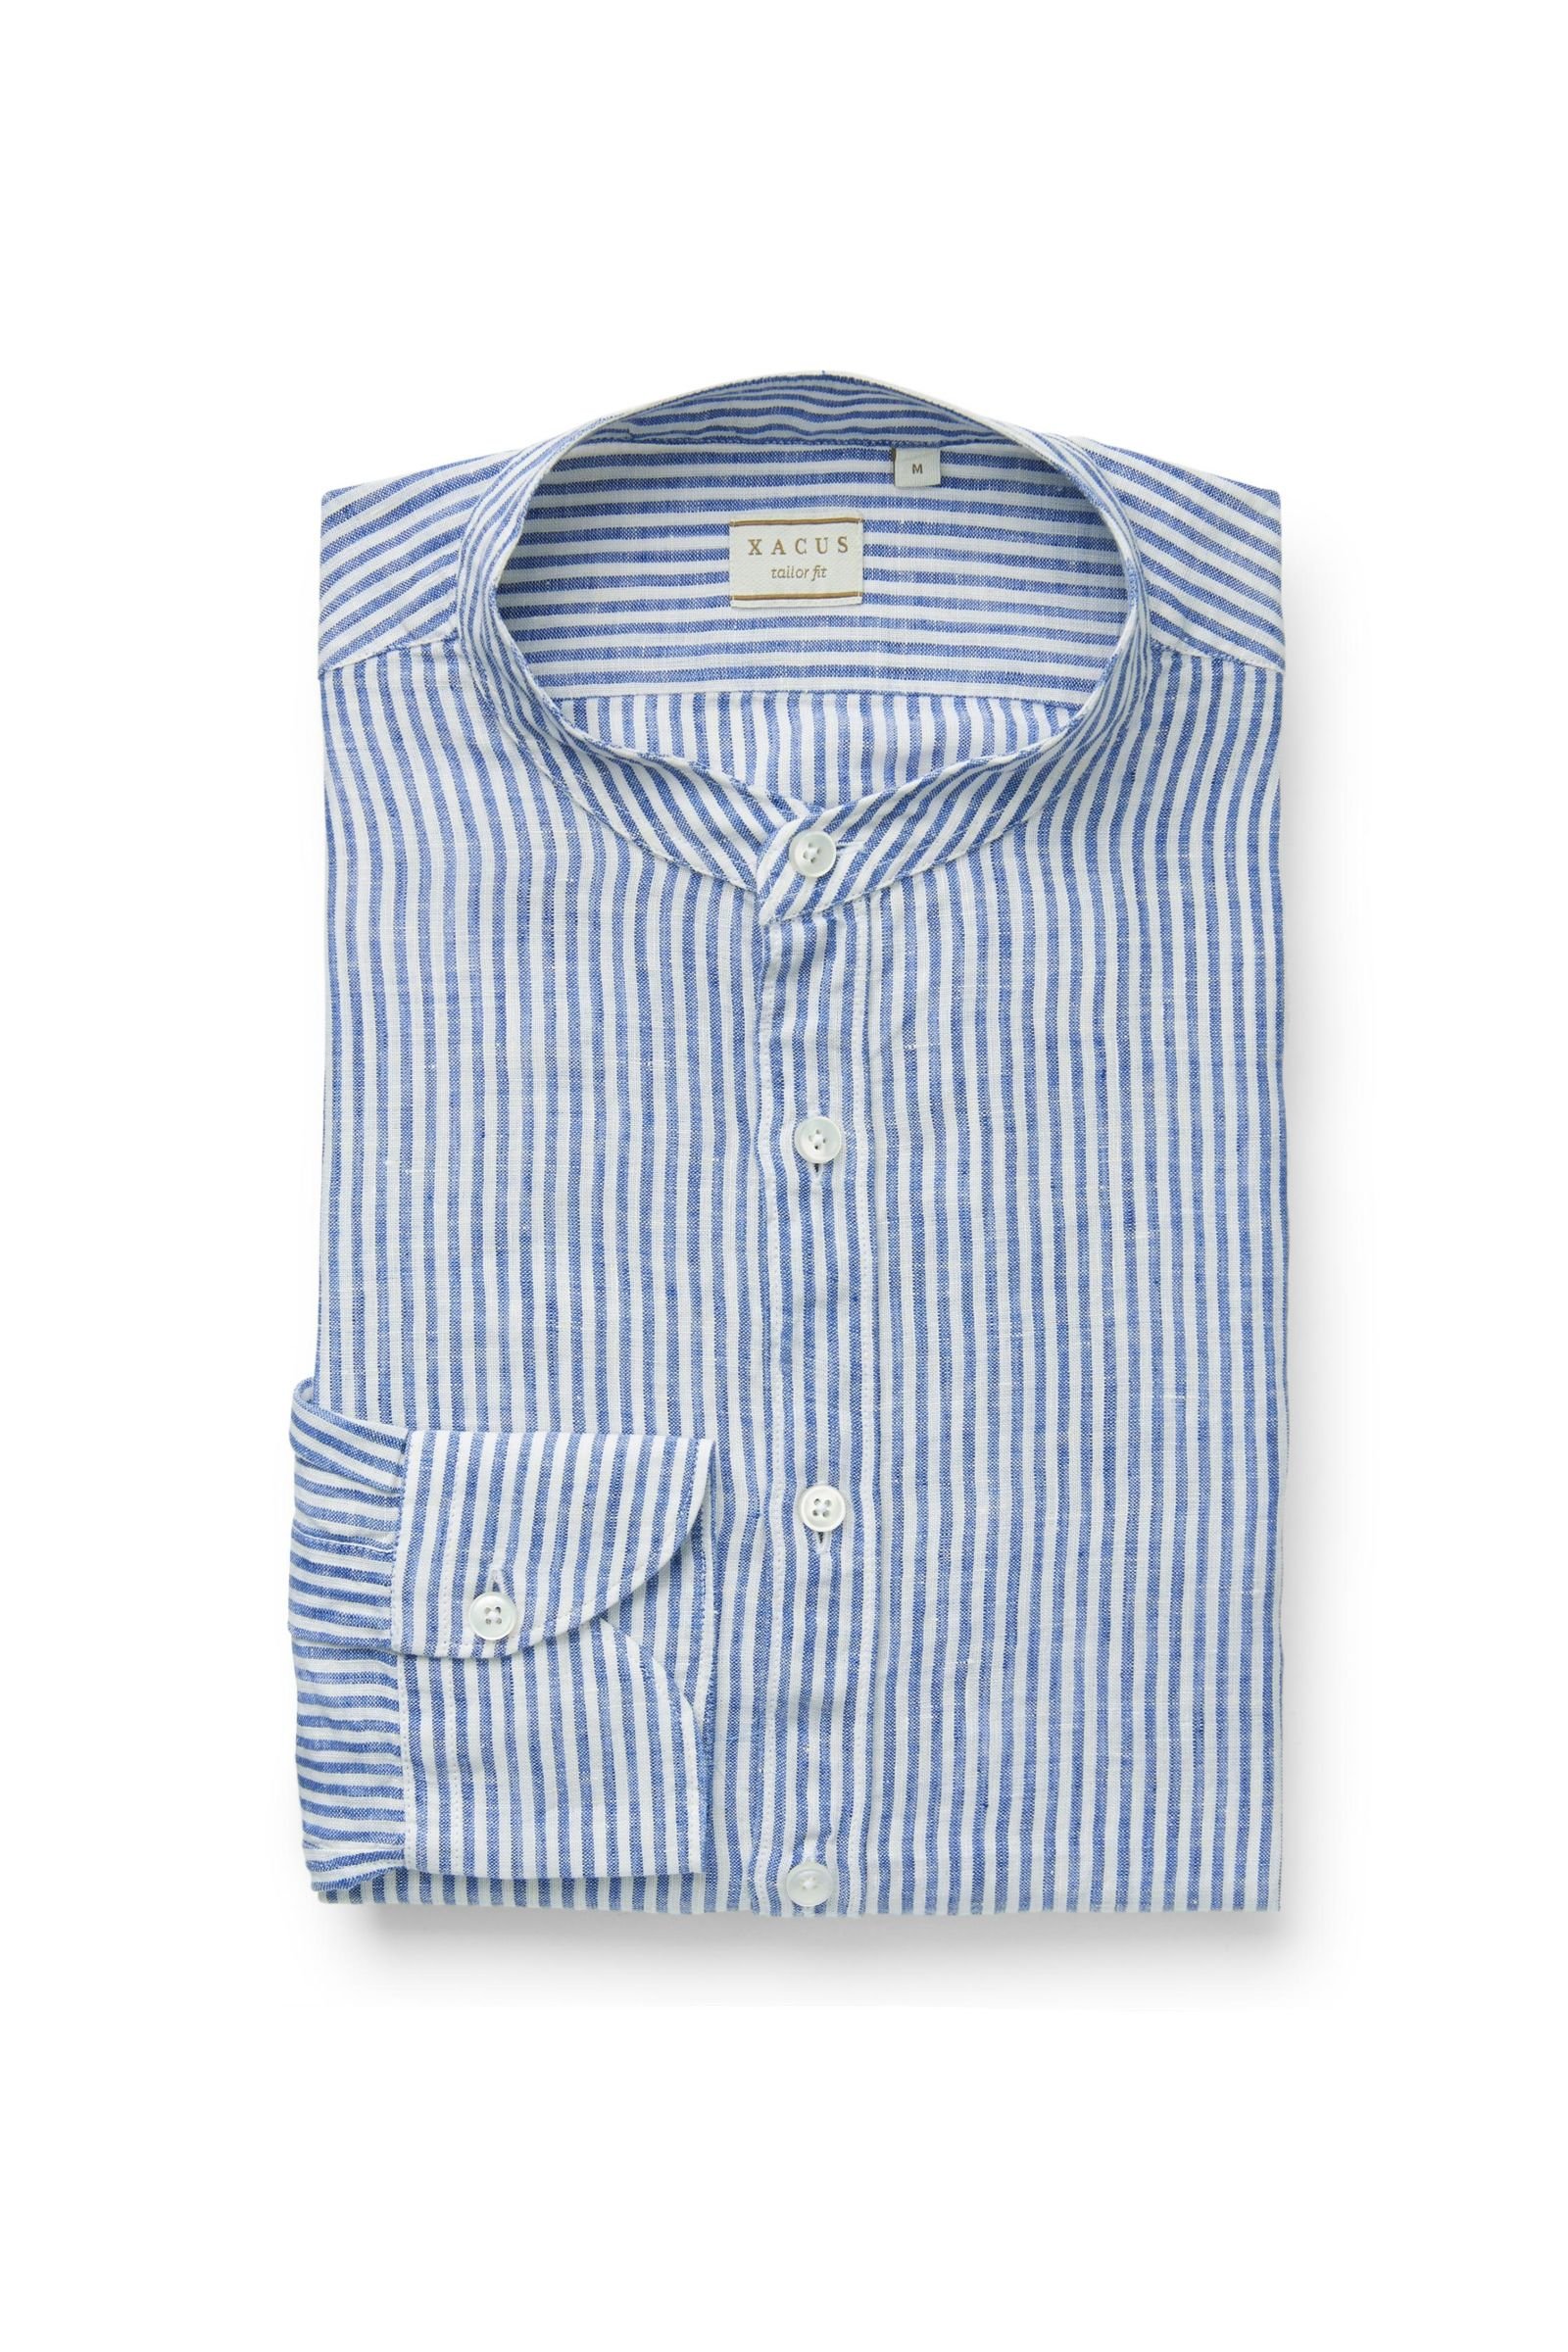 Linen shirt 'tailored fit' Grandad collar dark blue striped